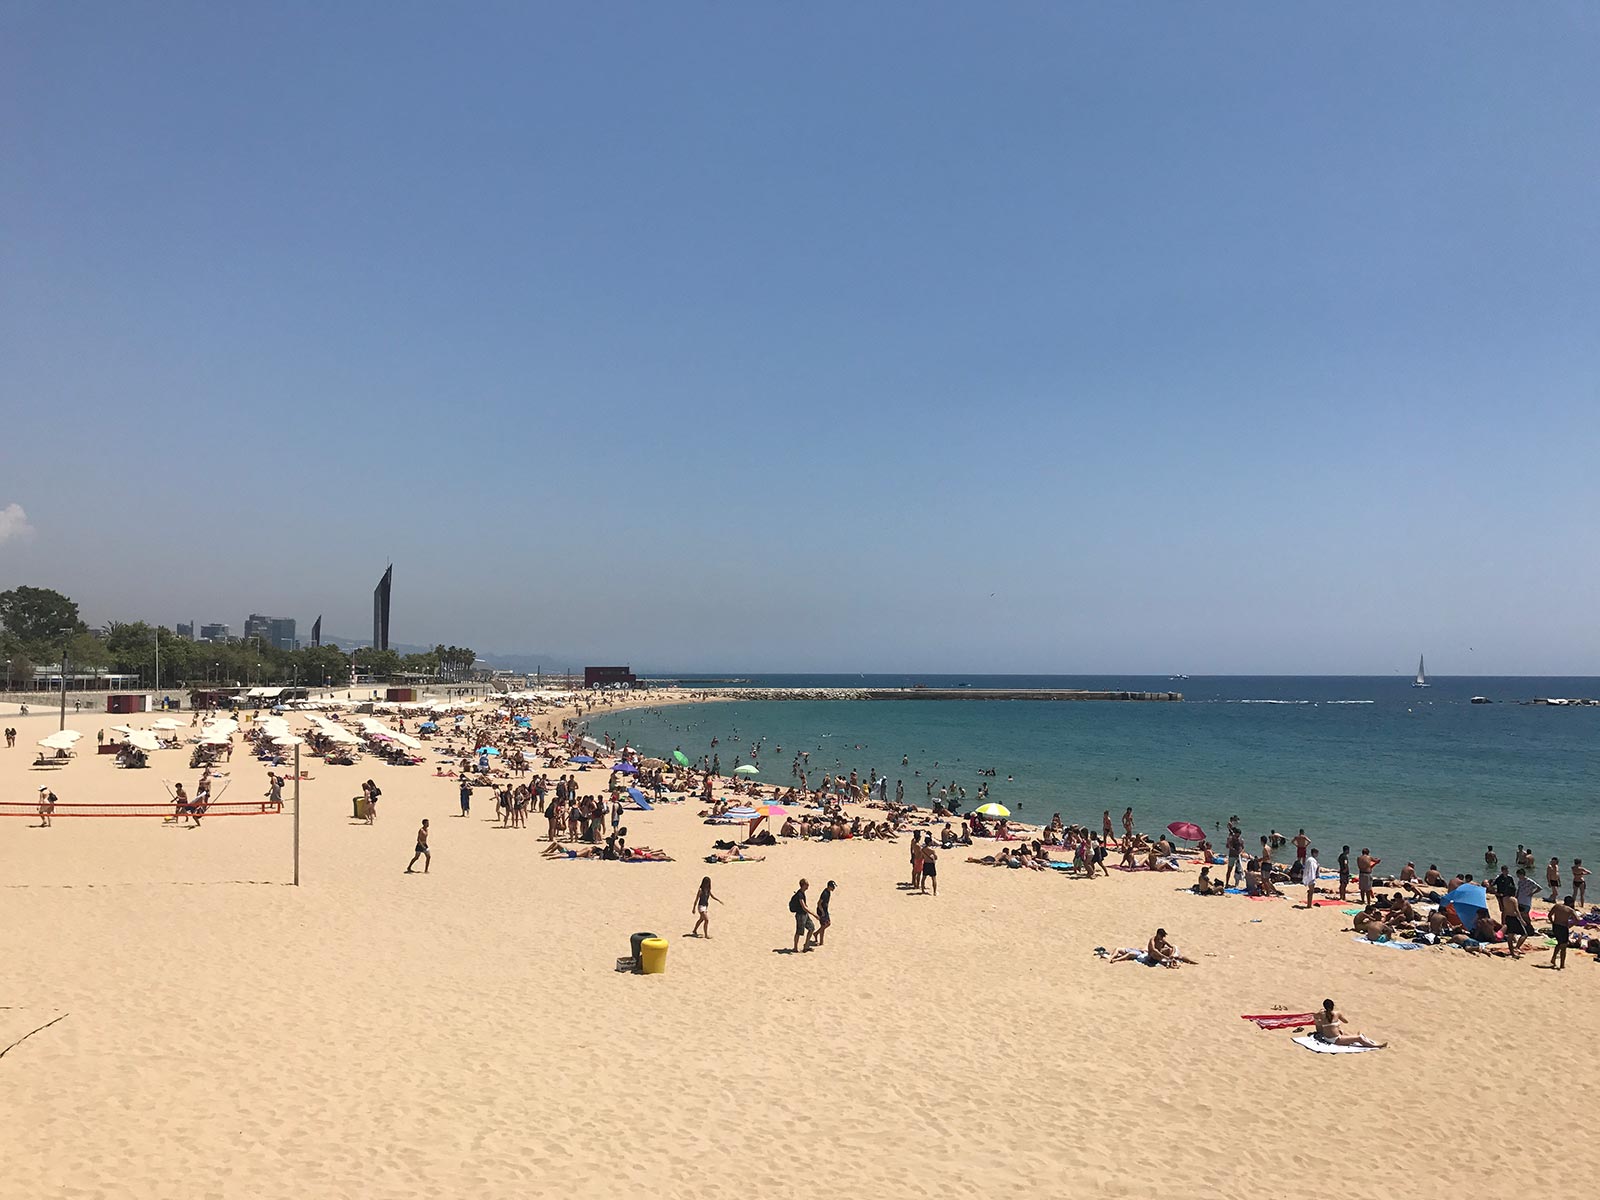 Beach in Barcelona, Spain. Andorra, Barcelona & Malta